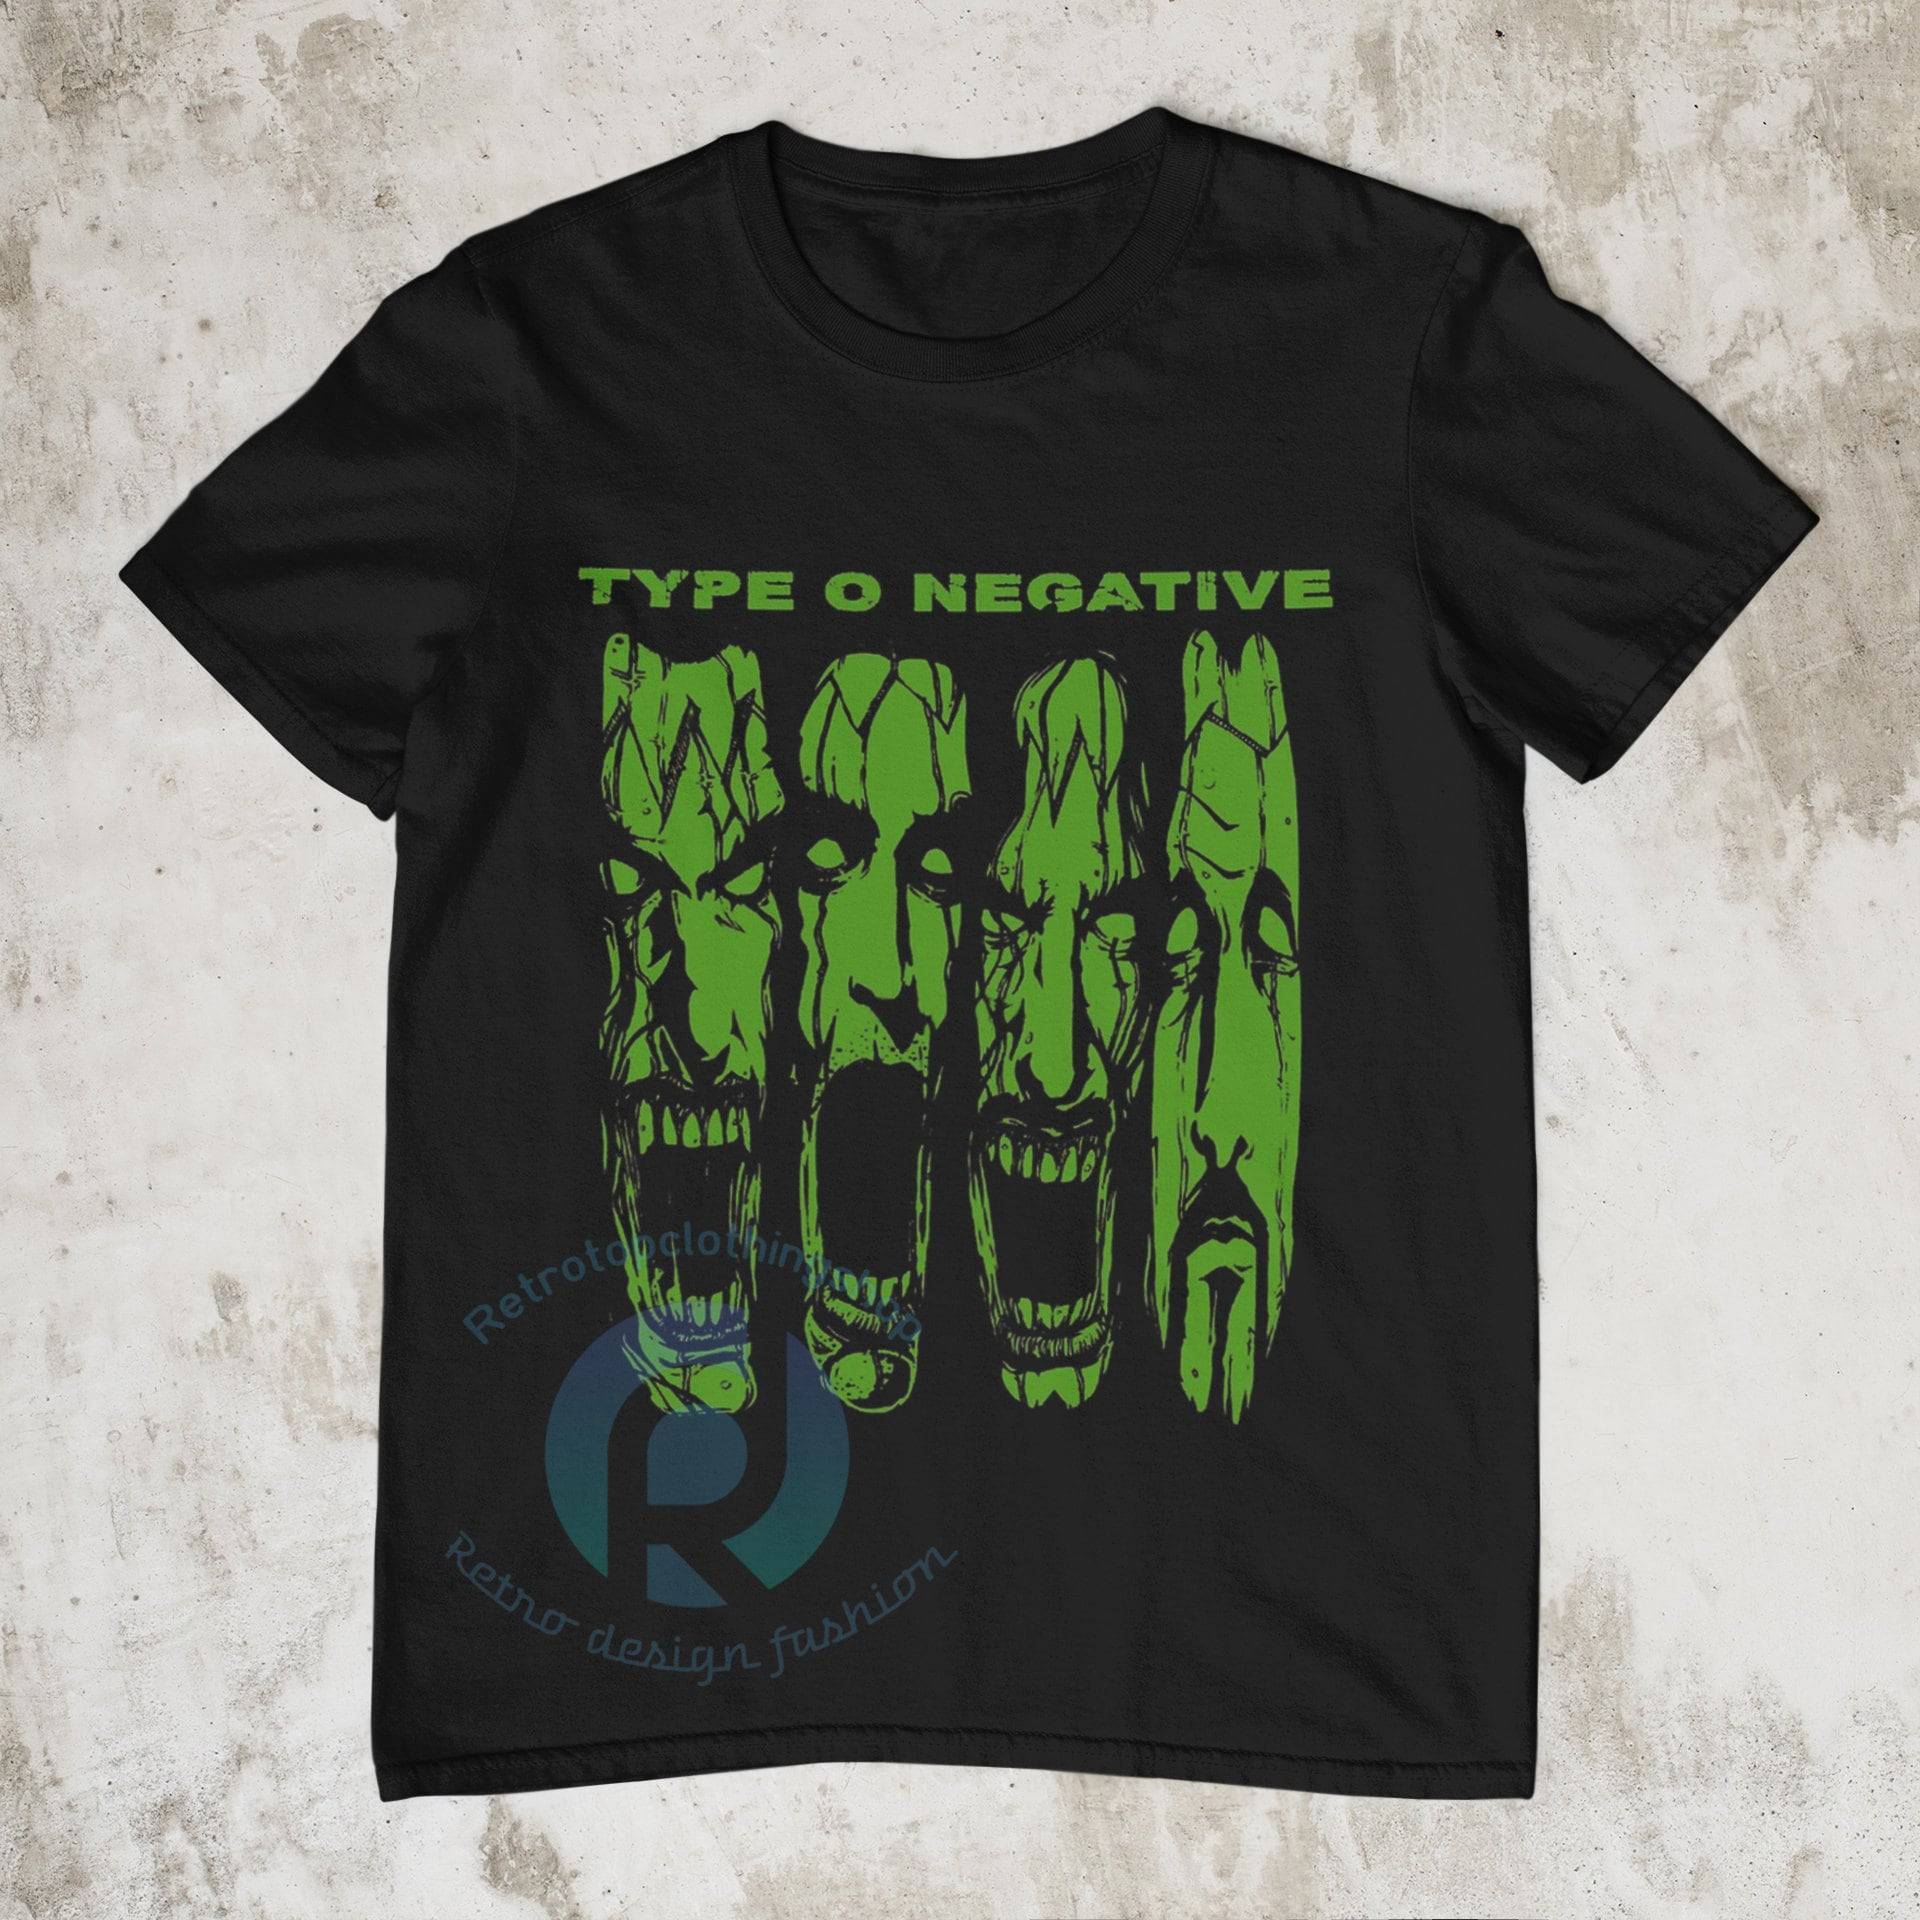 Peter Steele Shirt, Typ O Negative Tshirt, Negativ, Sweatshirt, Schwarze Metall Damen Shirt von RetrotopclothingShop